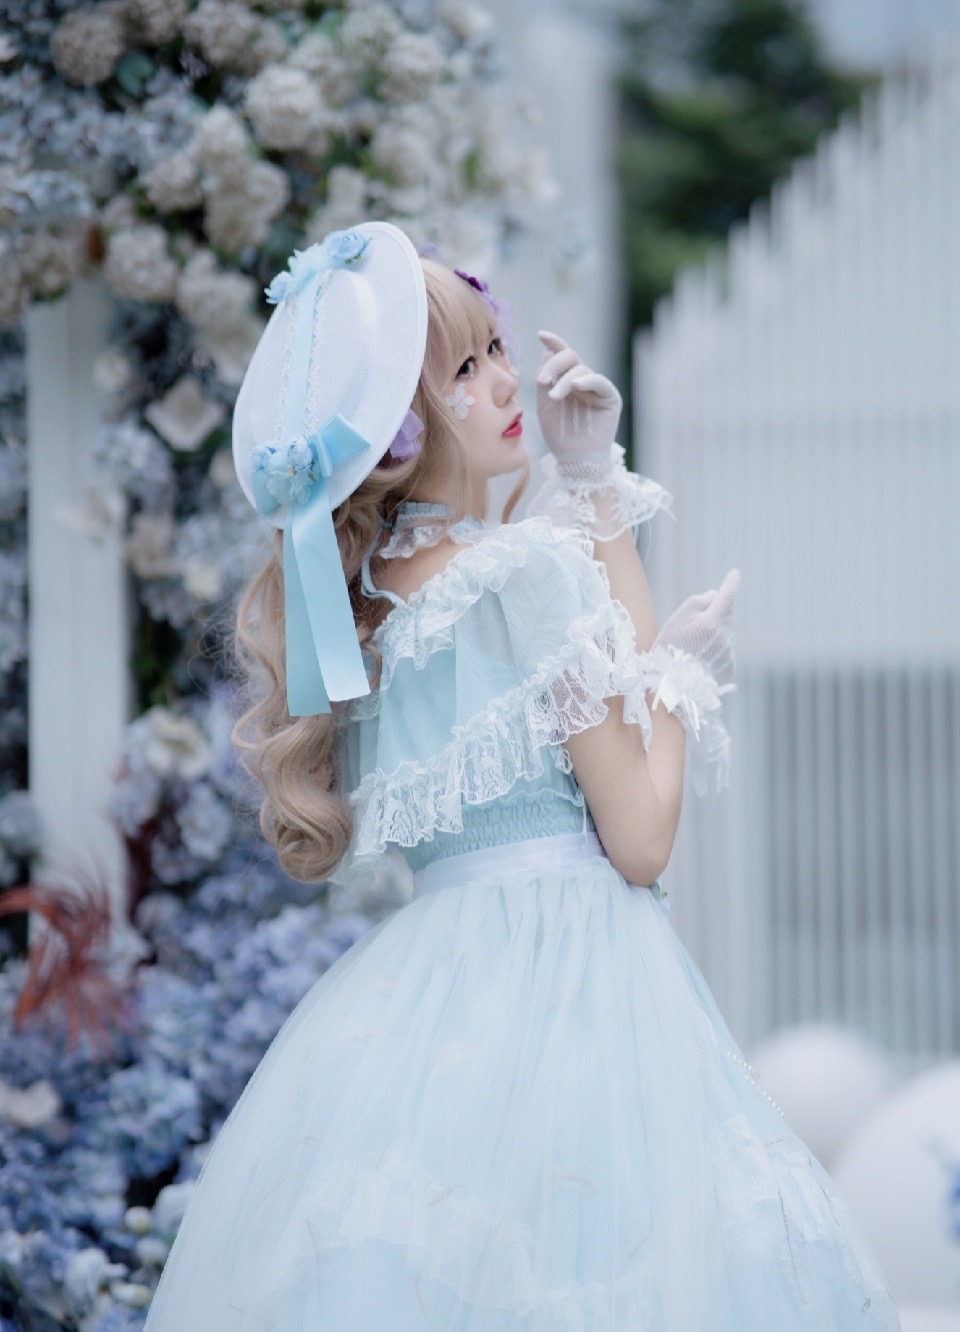 lolita小姐姐·浅蓝色仙女裙,像来自童话一般